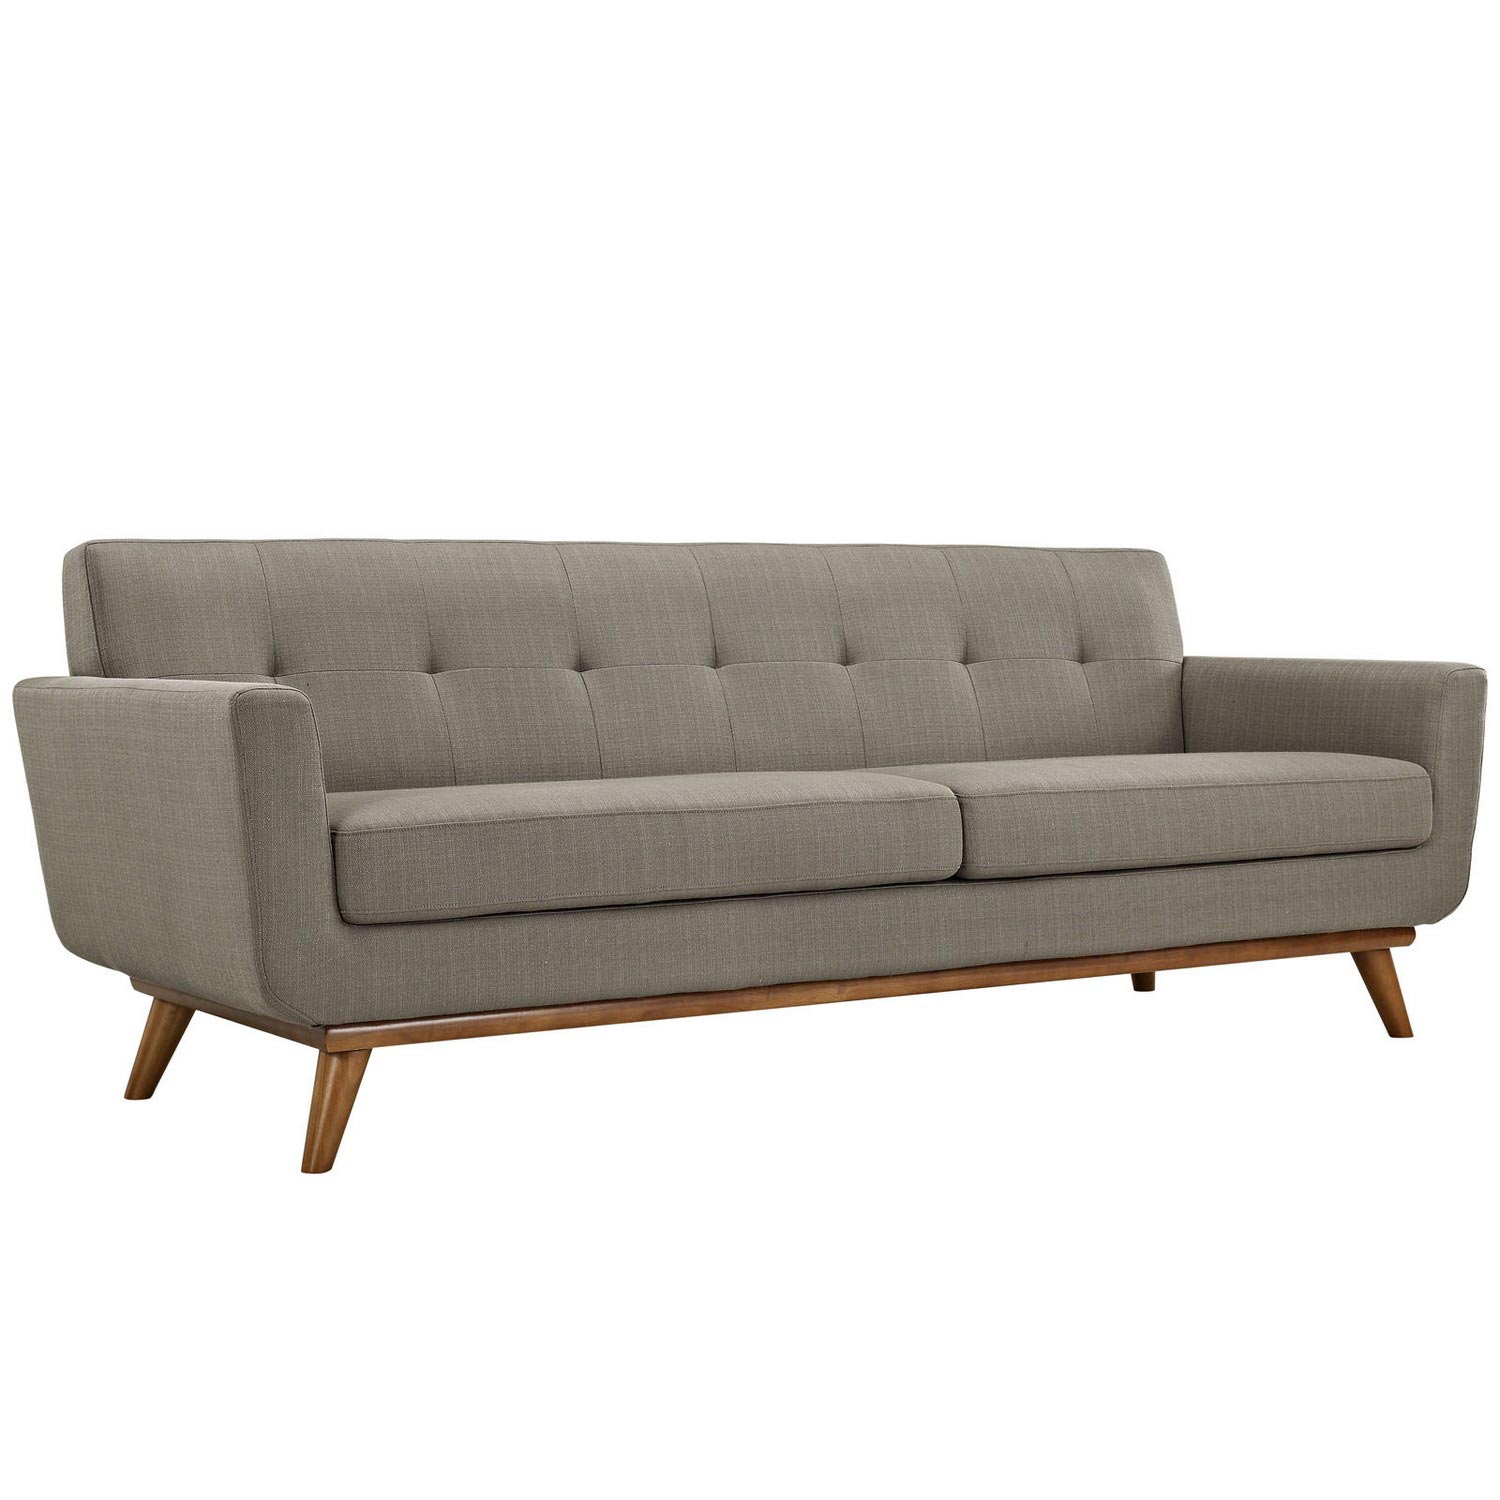 Modway Engage Upholstered Sofa - Granite